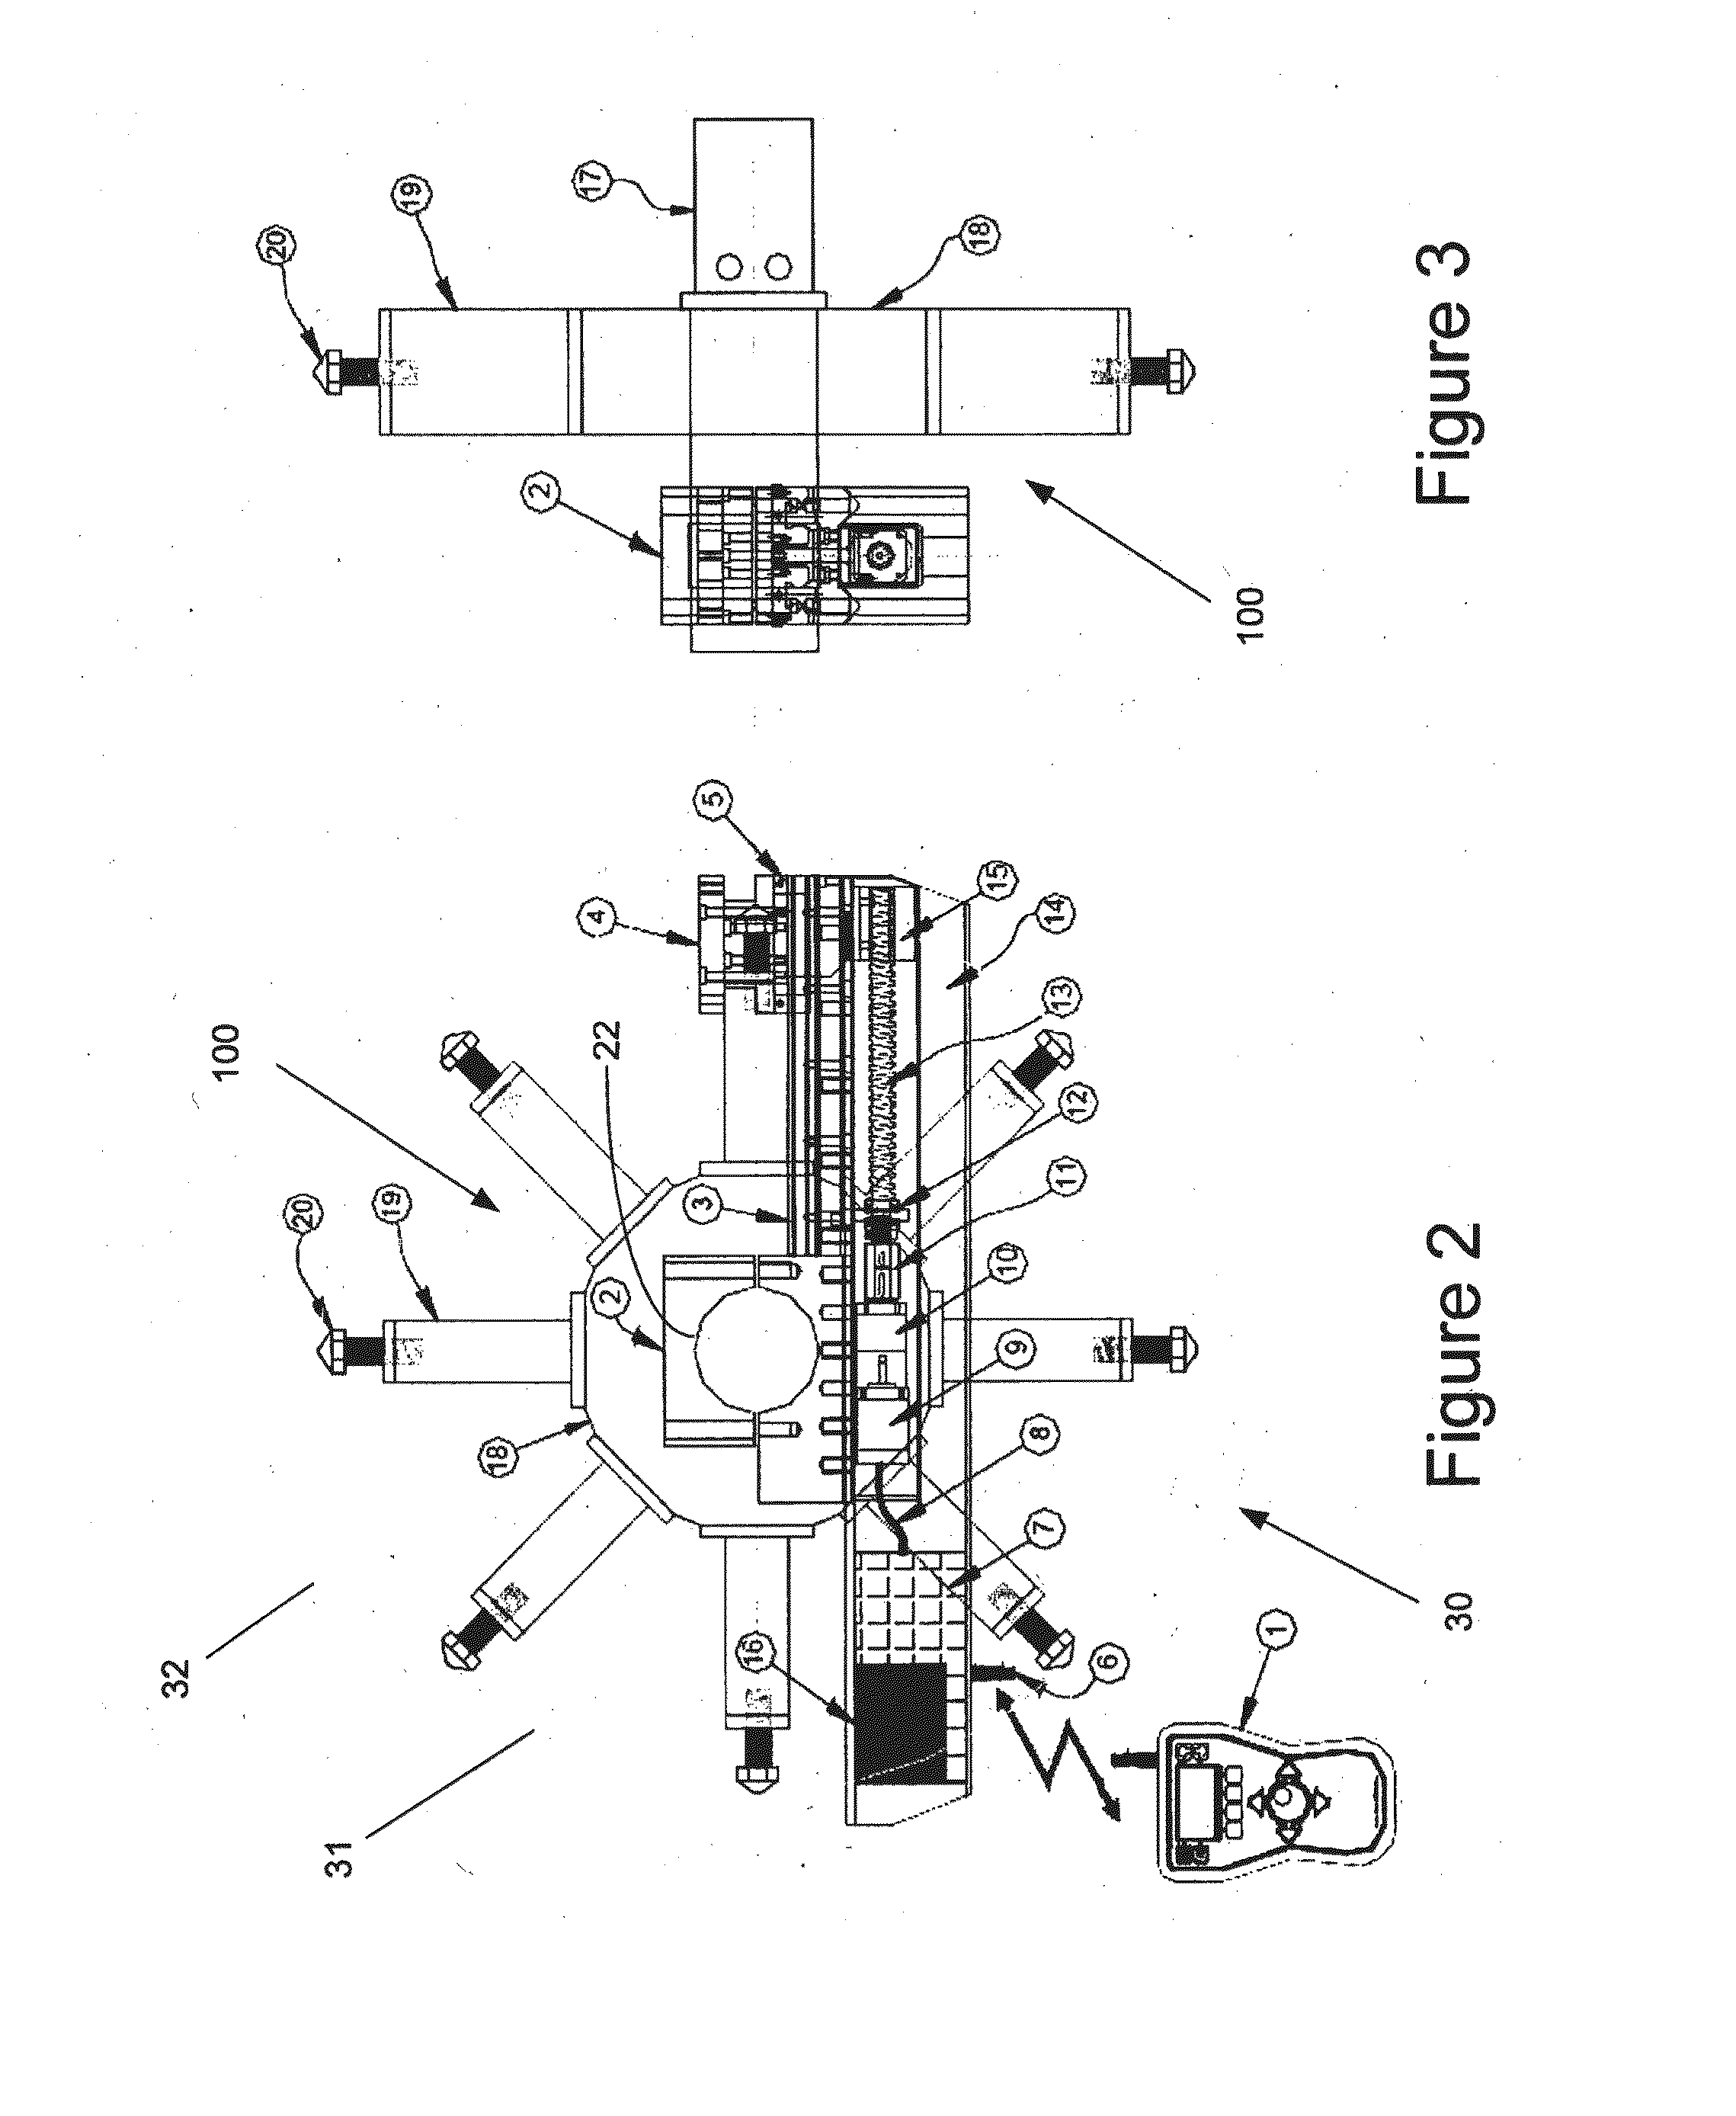 Surface machining apparatus